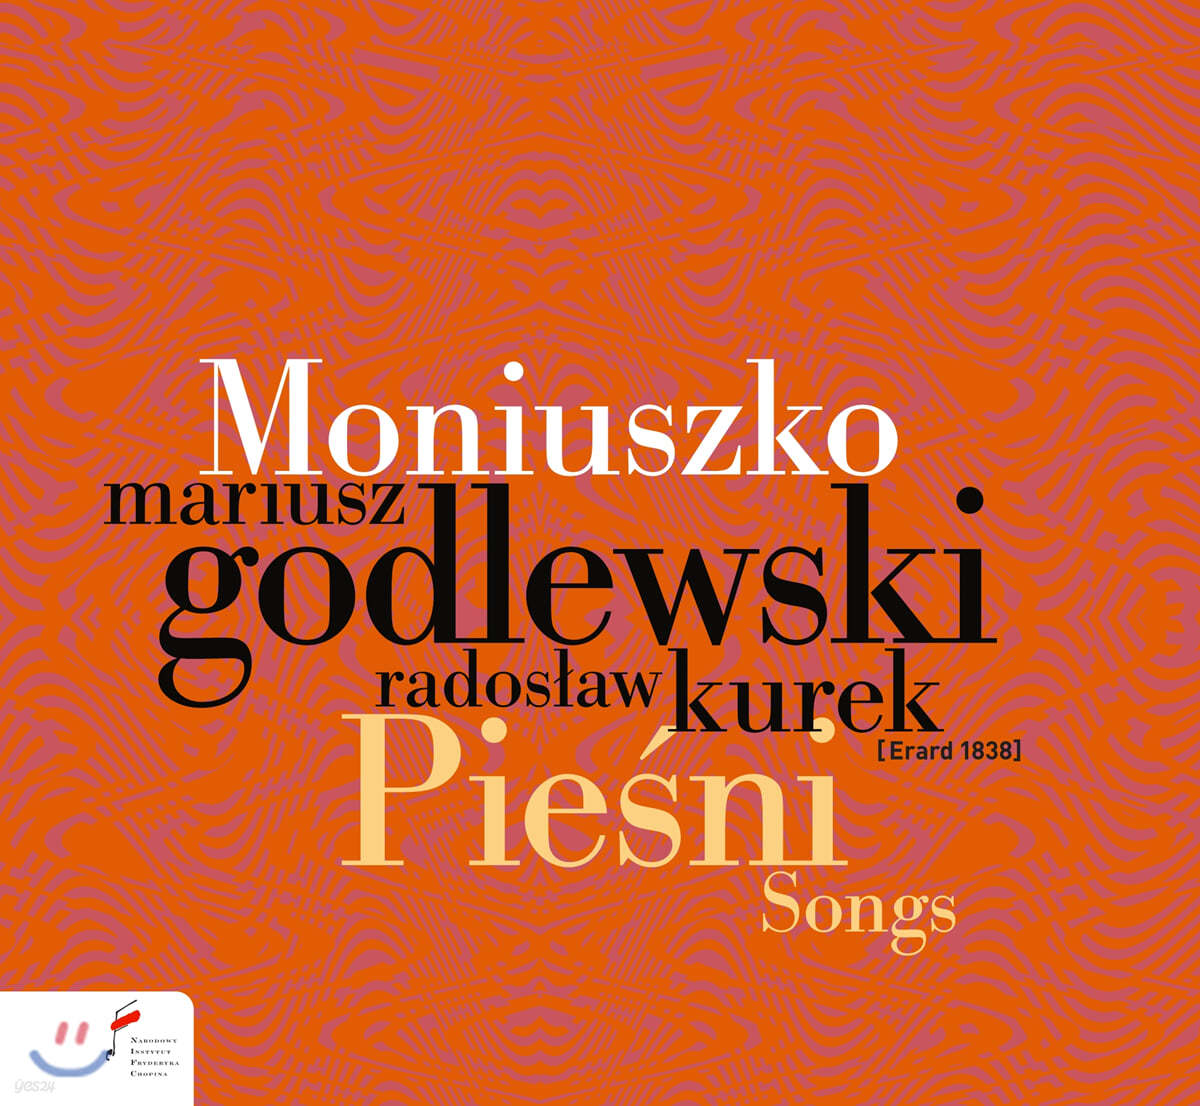 Mariusz Godlewski 모니우슈코: 가곡집 (Moniuszko: Songs) 